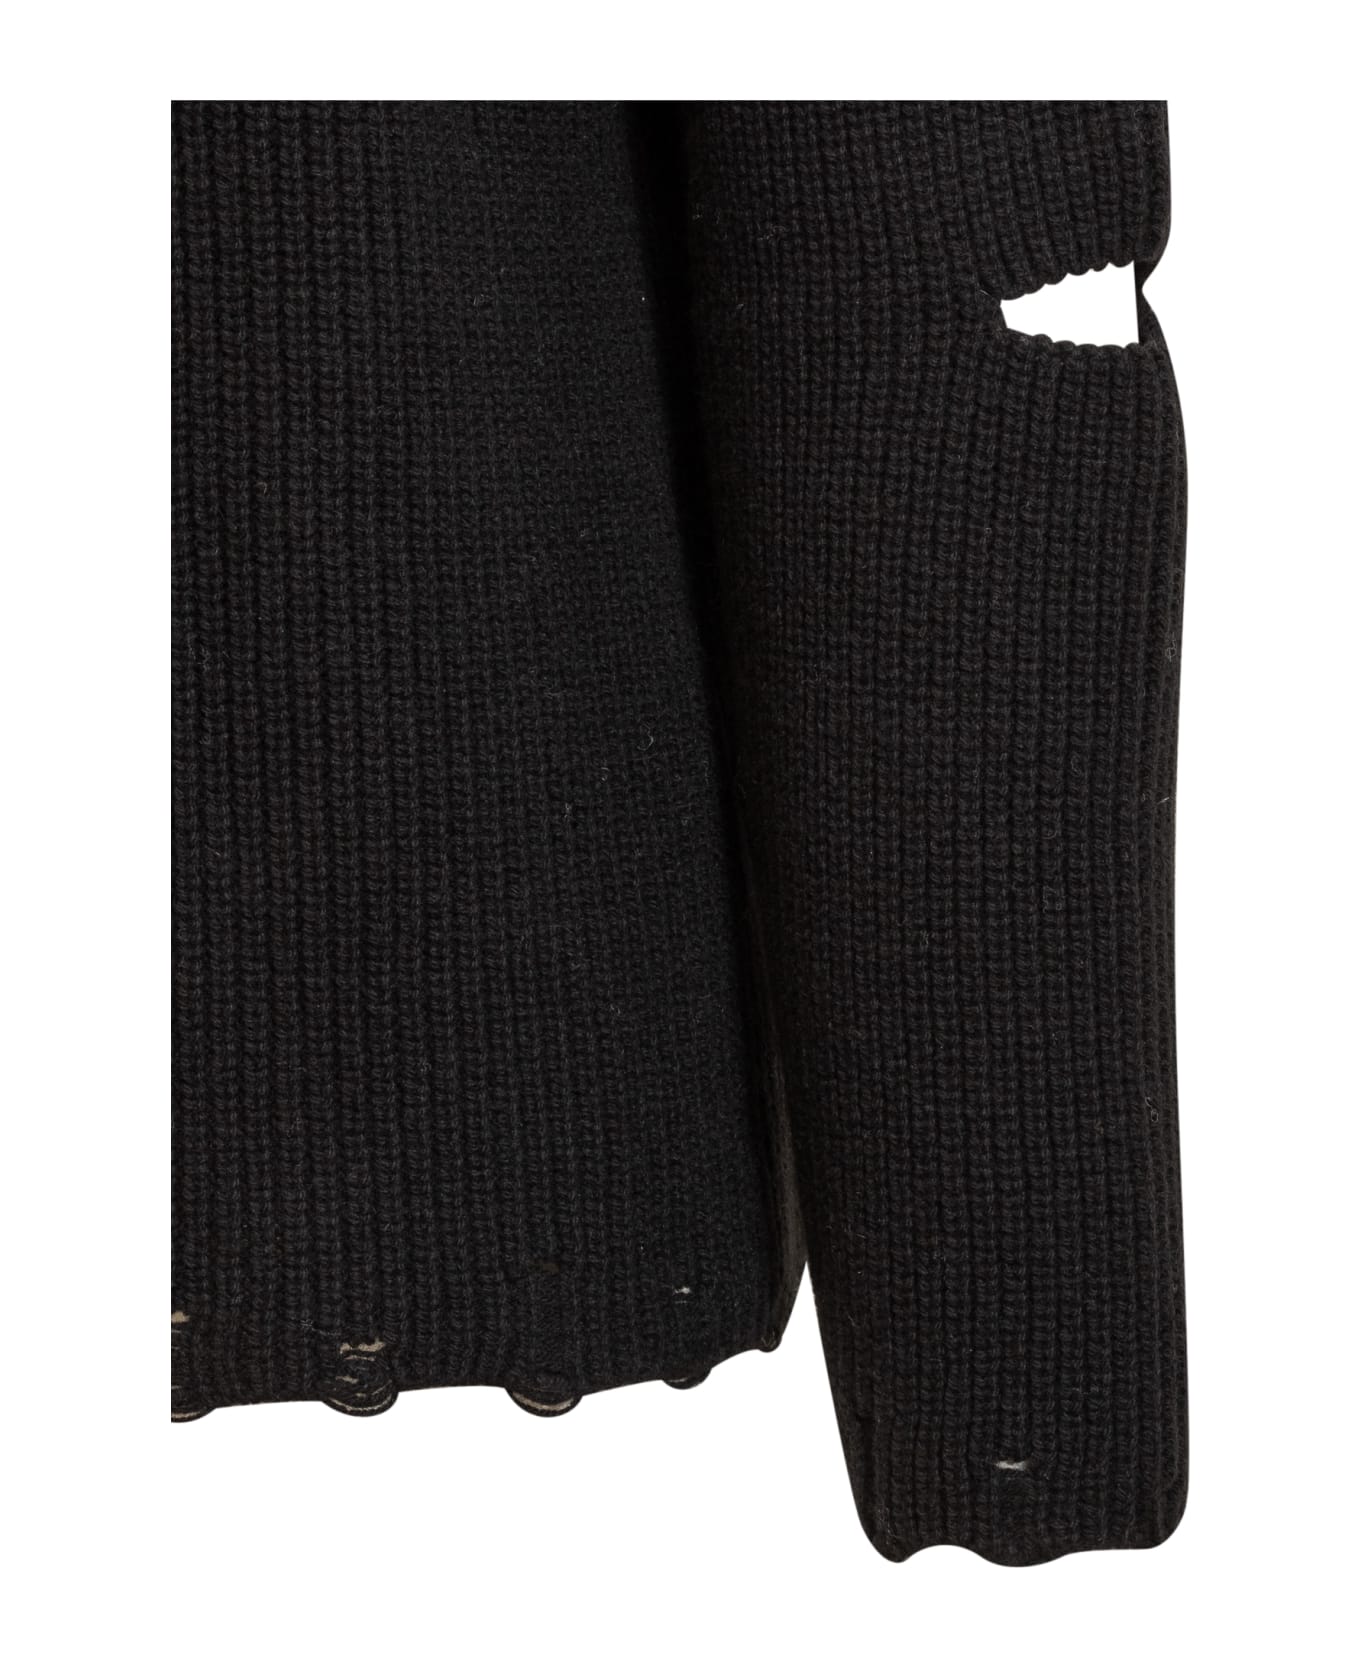 A Paper Kid Crewneck Sweater - Nero/black